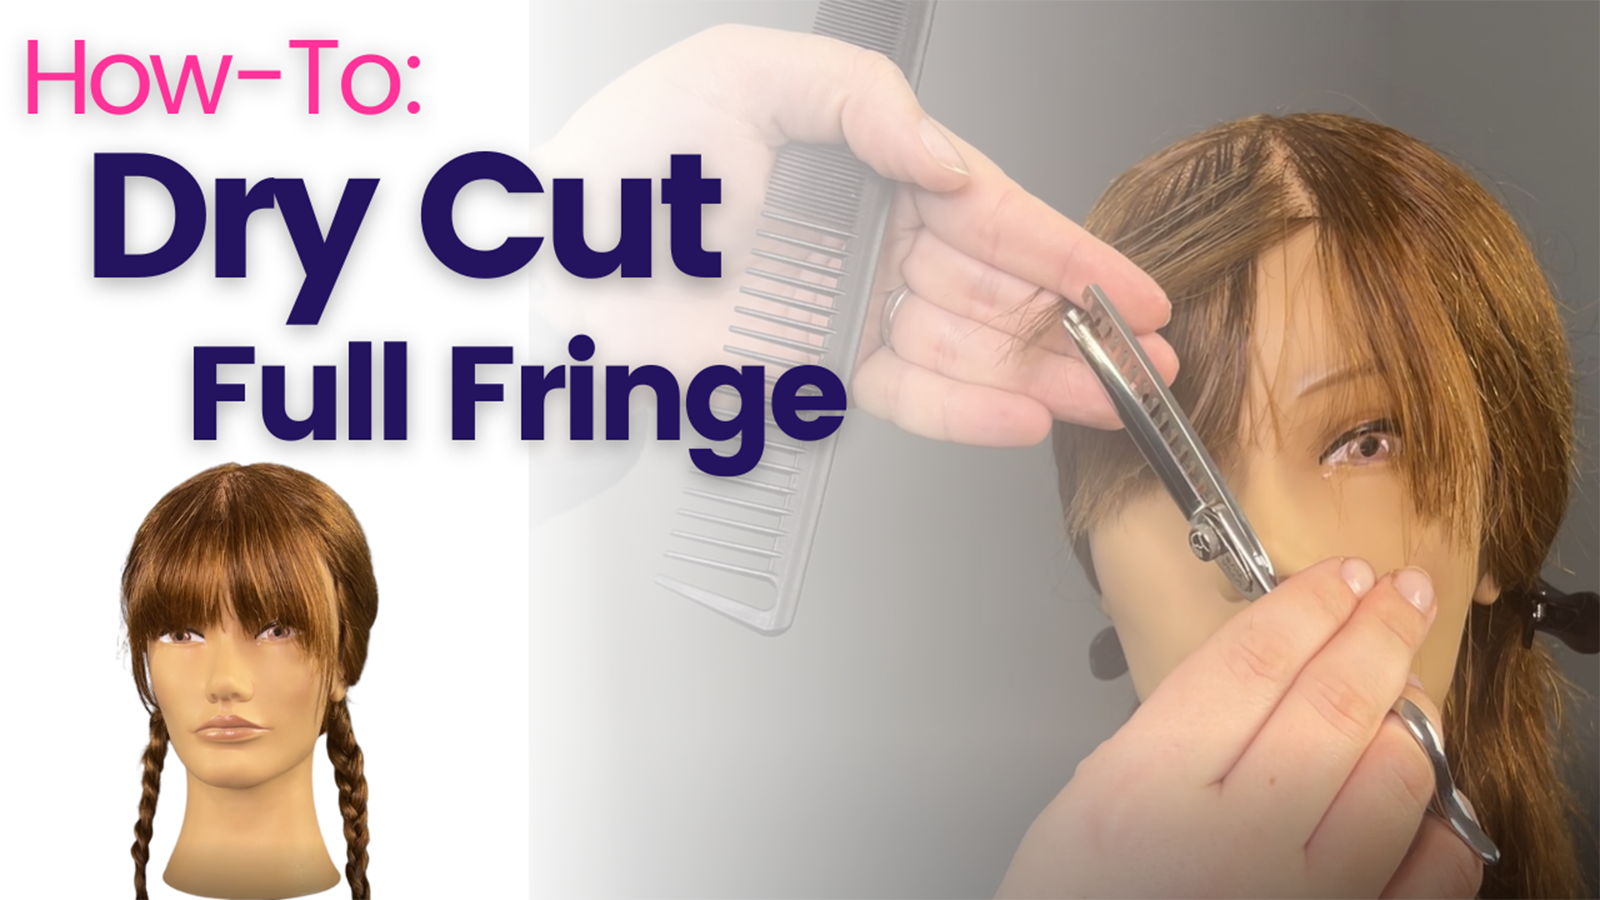 Dry Cut Full Fringe